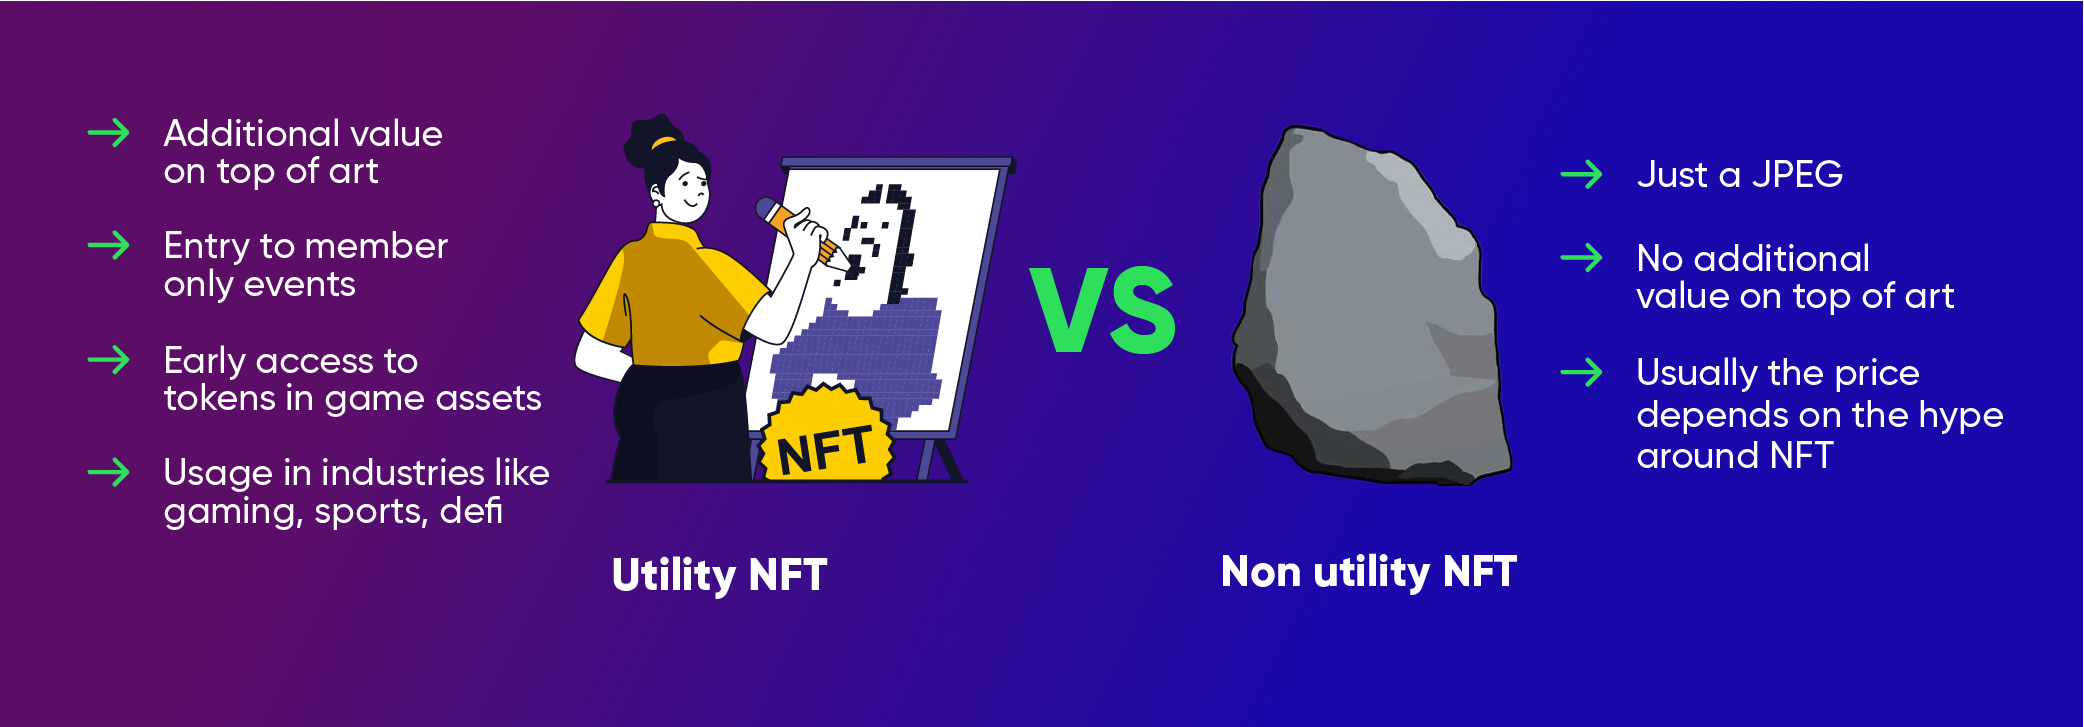 nft utility